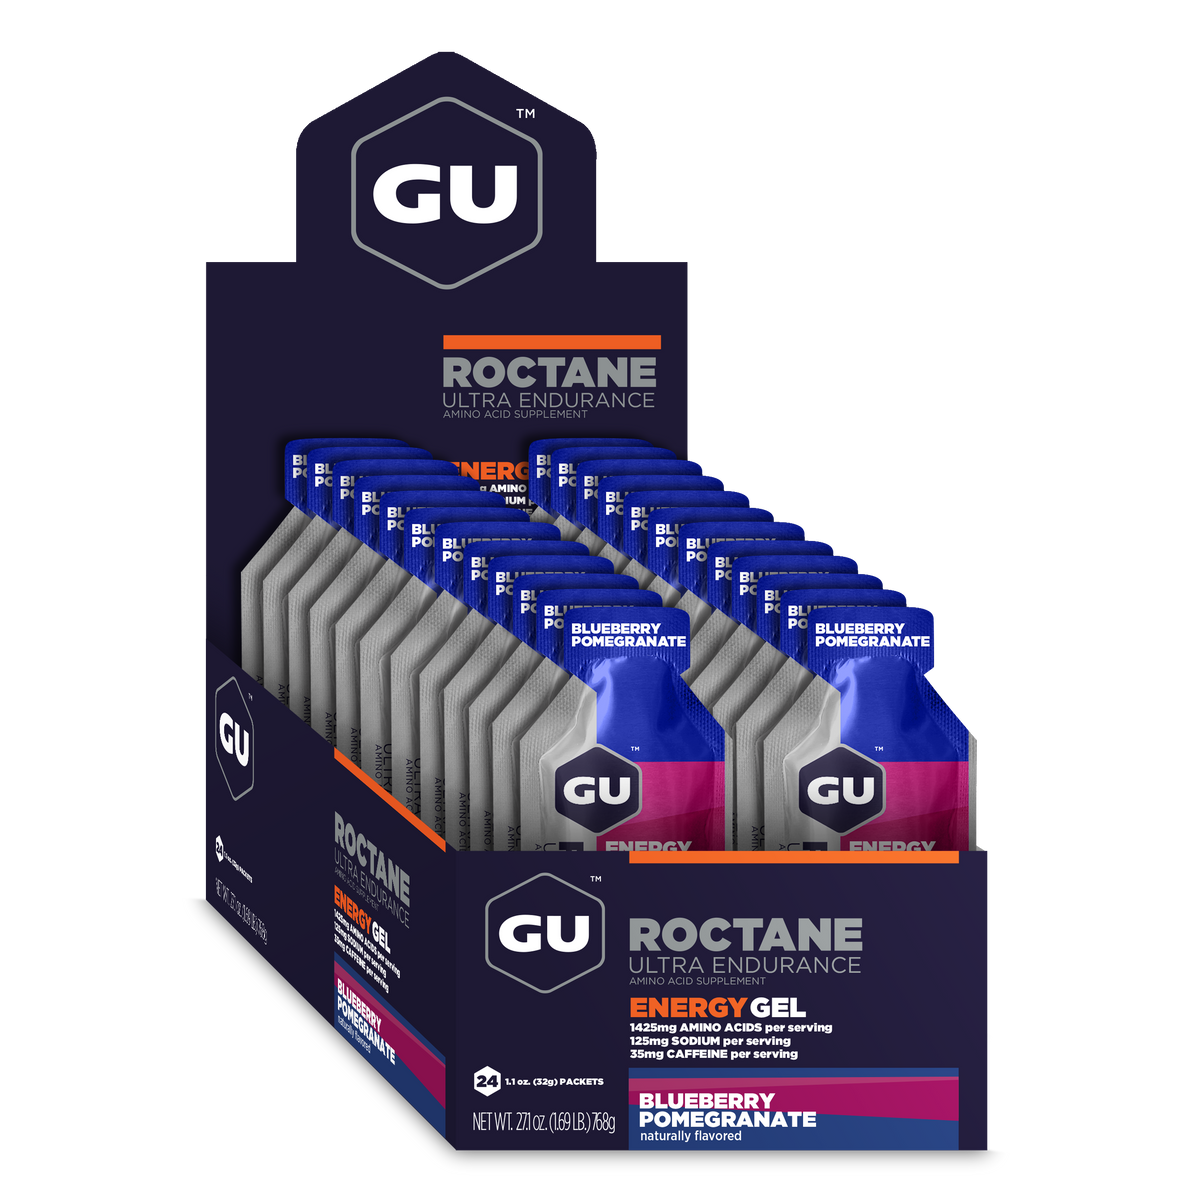 GU Energy - Roctane Energy Gels - Blueberry Pomegranate (with caffeine)